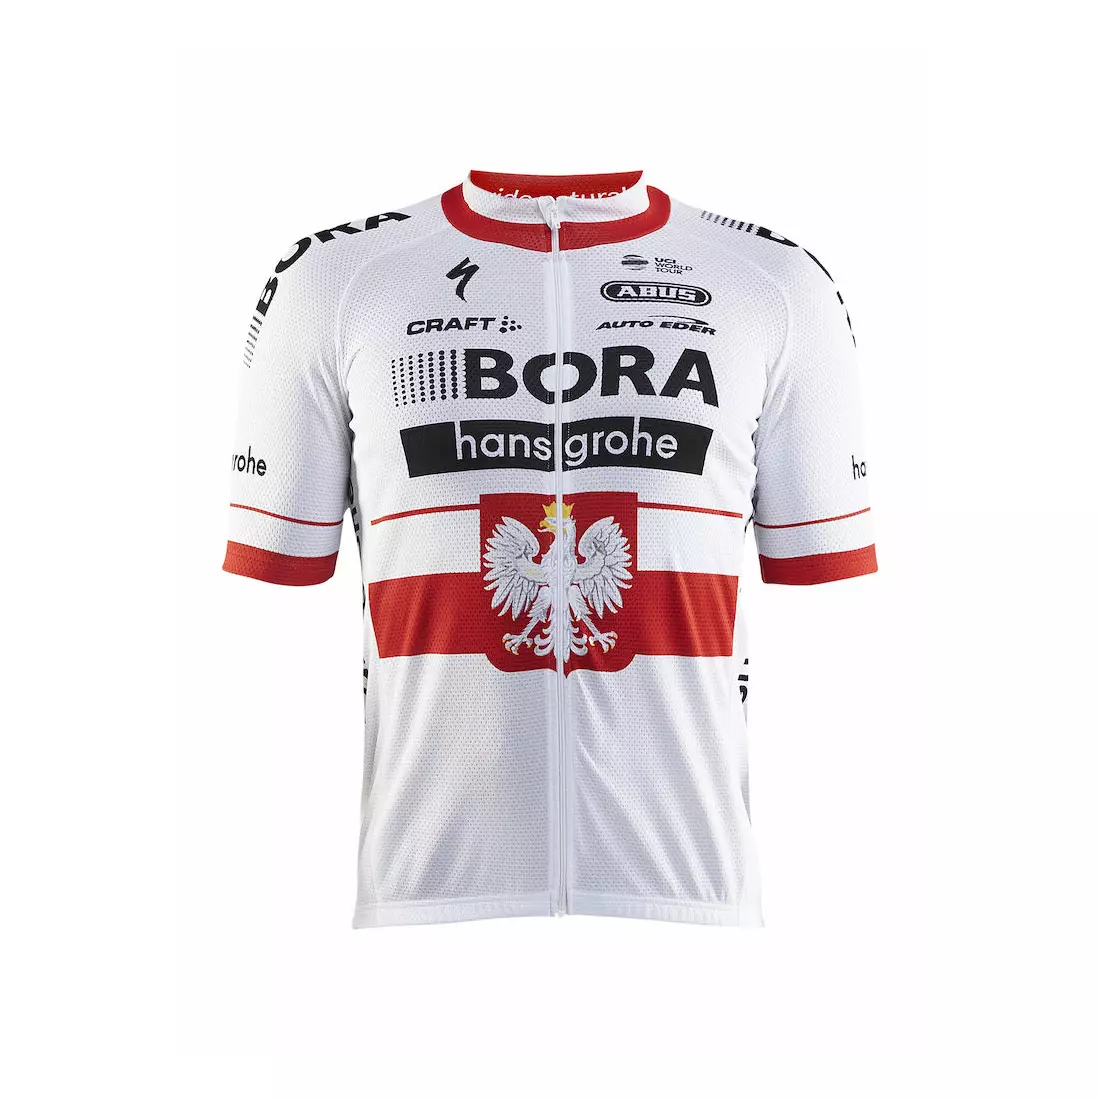 Tricou pentru ciclism CRAFT BORA hansgrohe Polosh Champion 1906104-2430